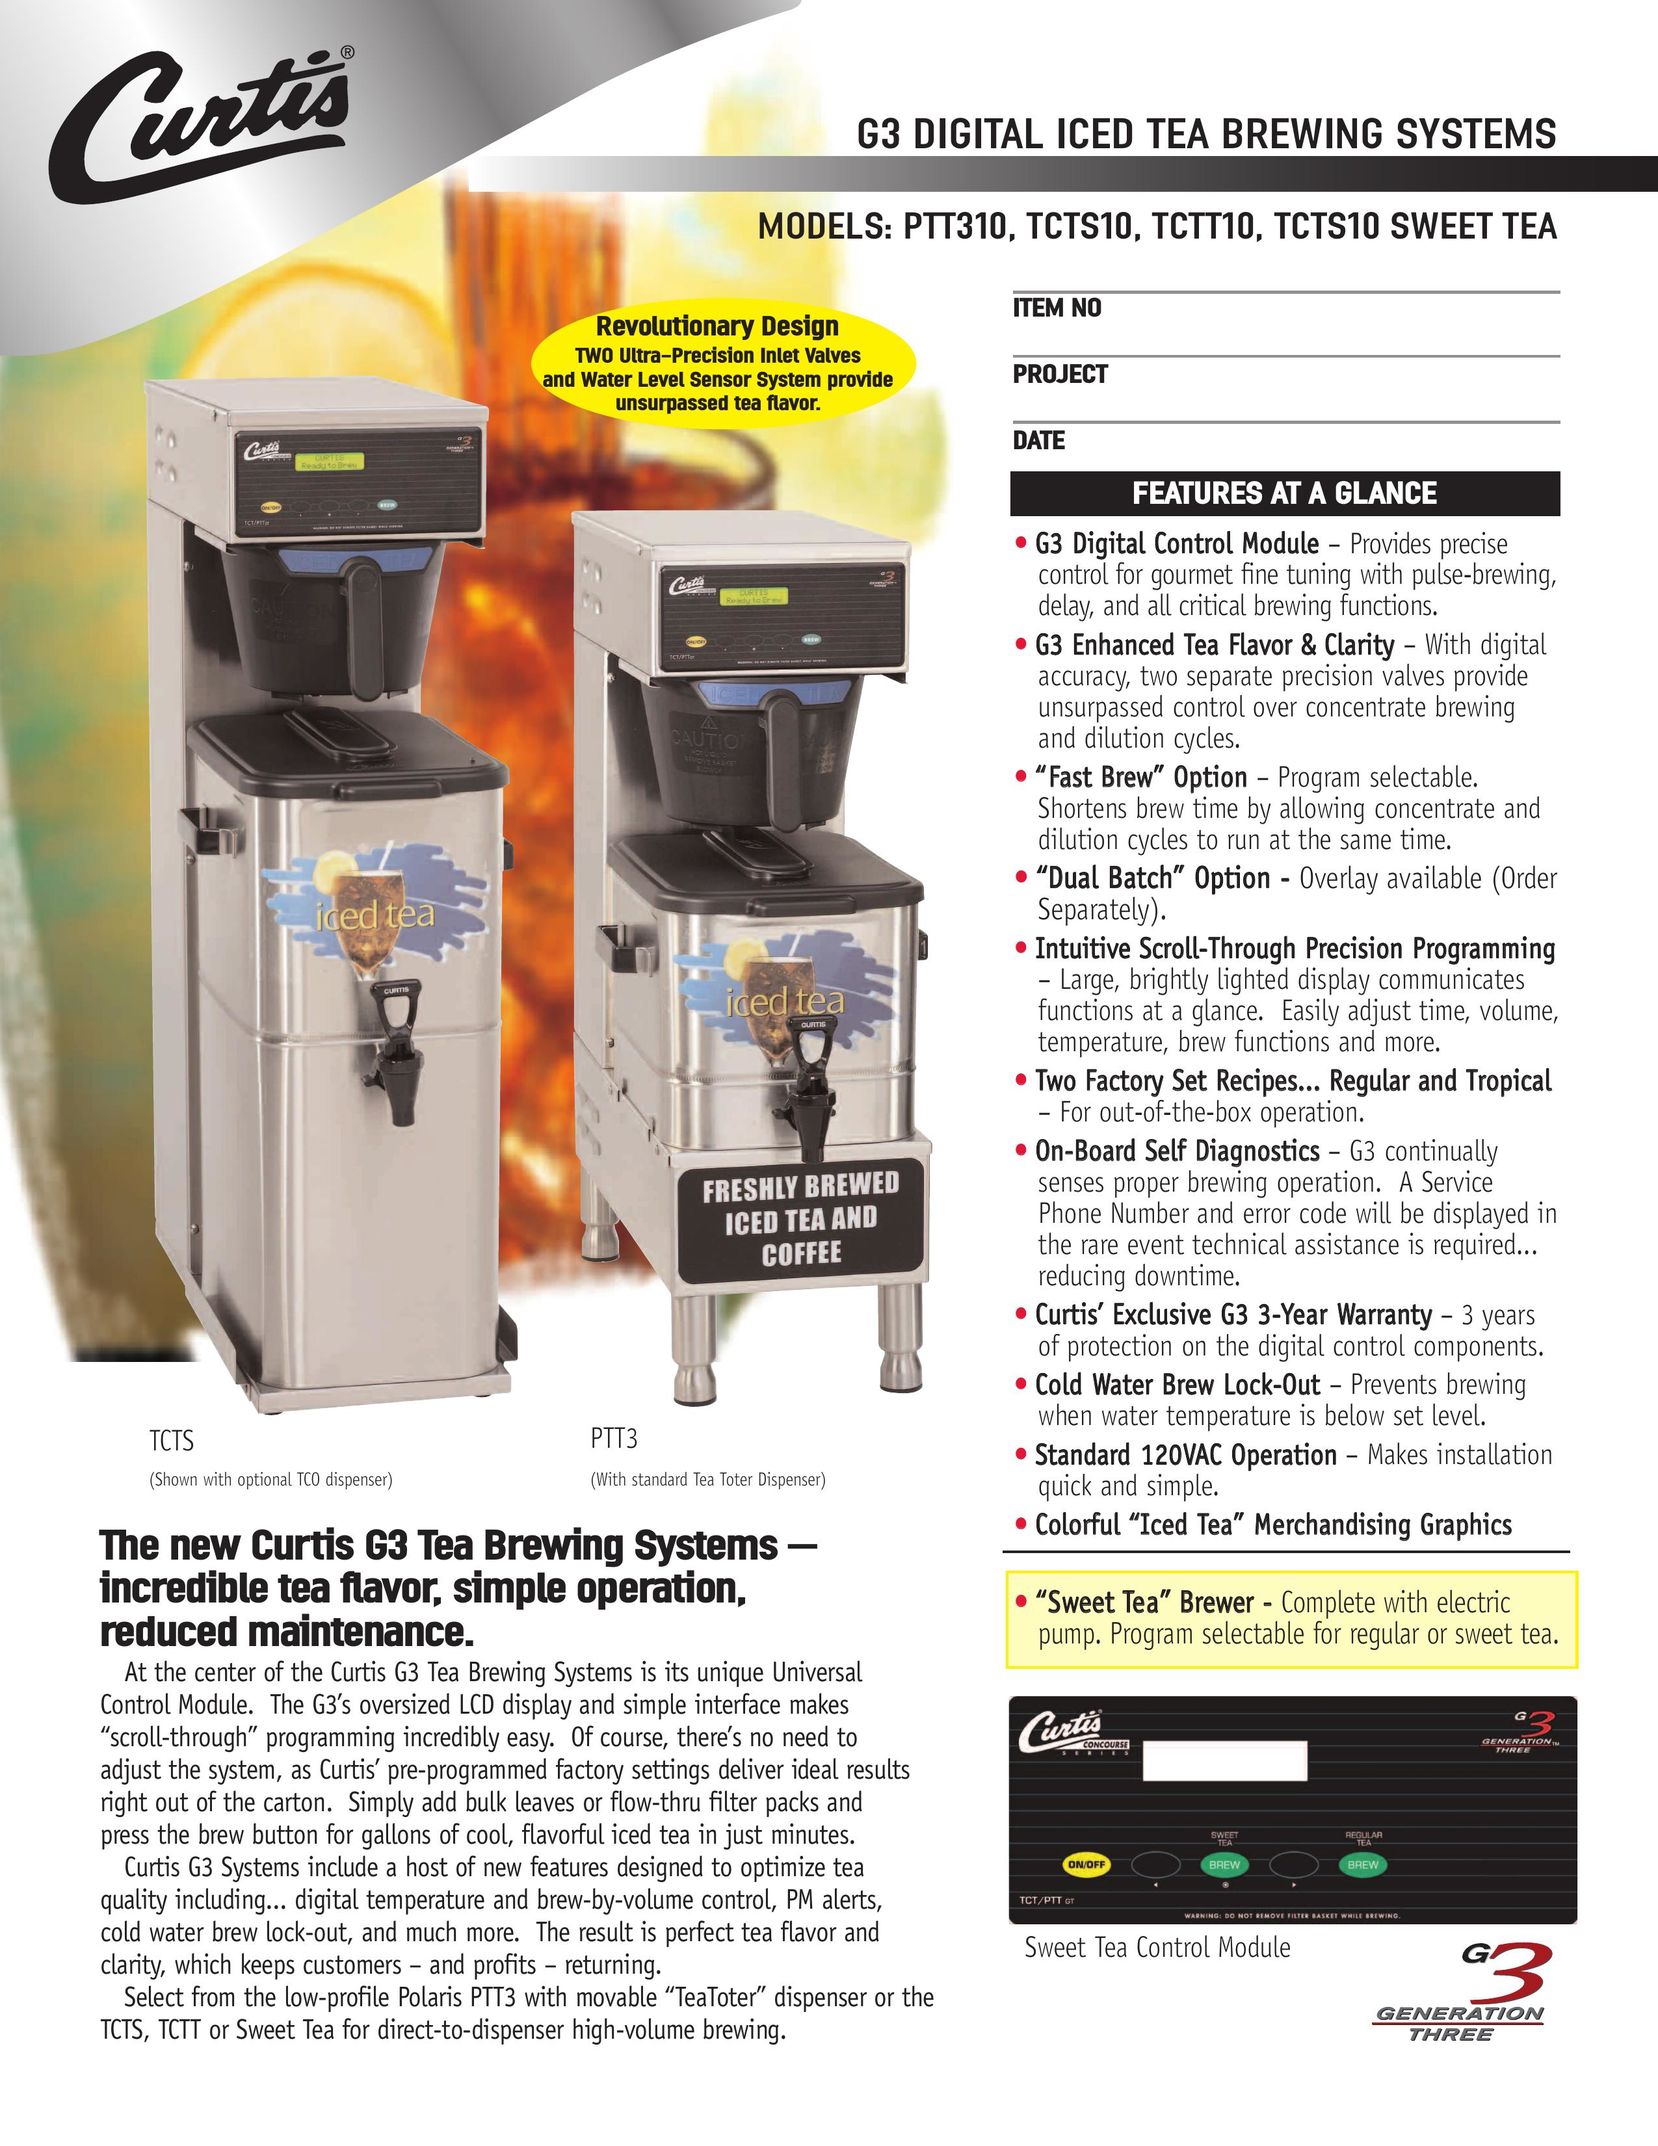 Curtis TCTT10 Ice Tea Maker User Manual